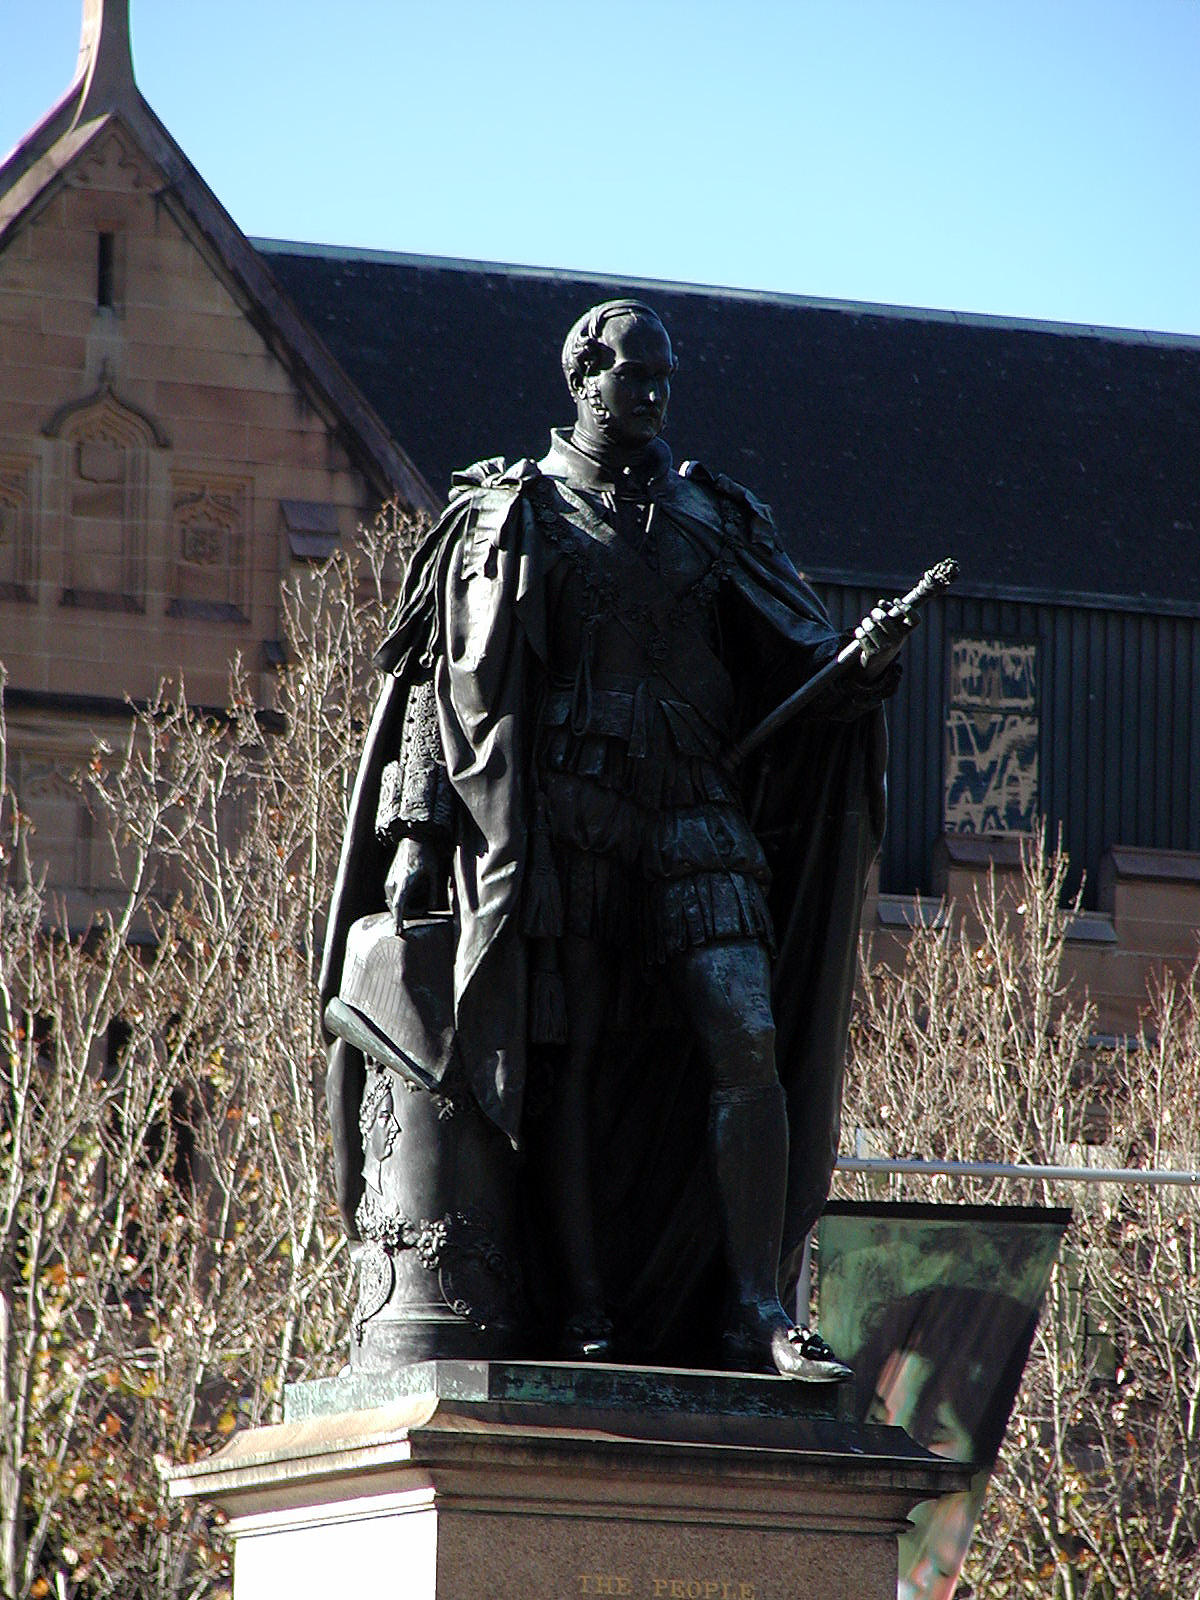 20-Jun-2001 09:54 - Sydney - Statue of Prince Albert